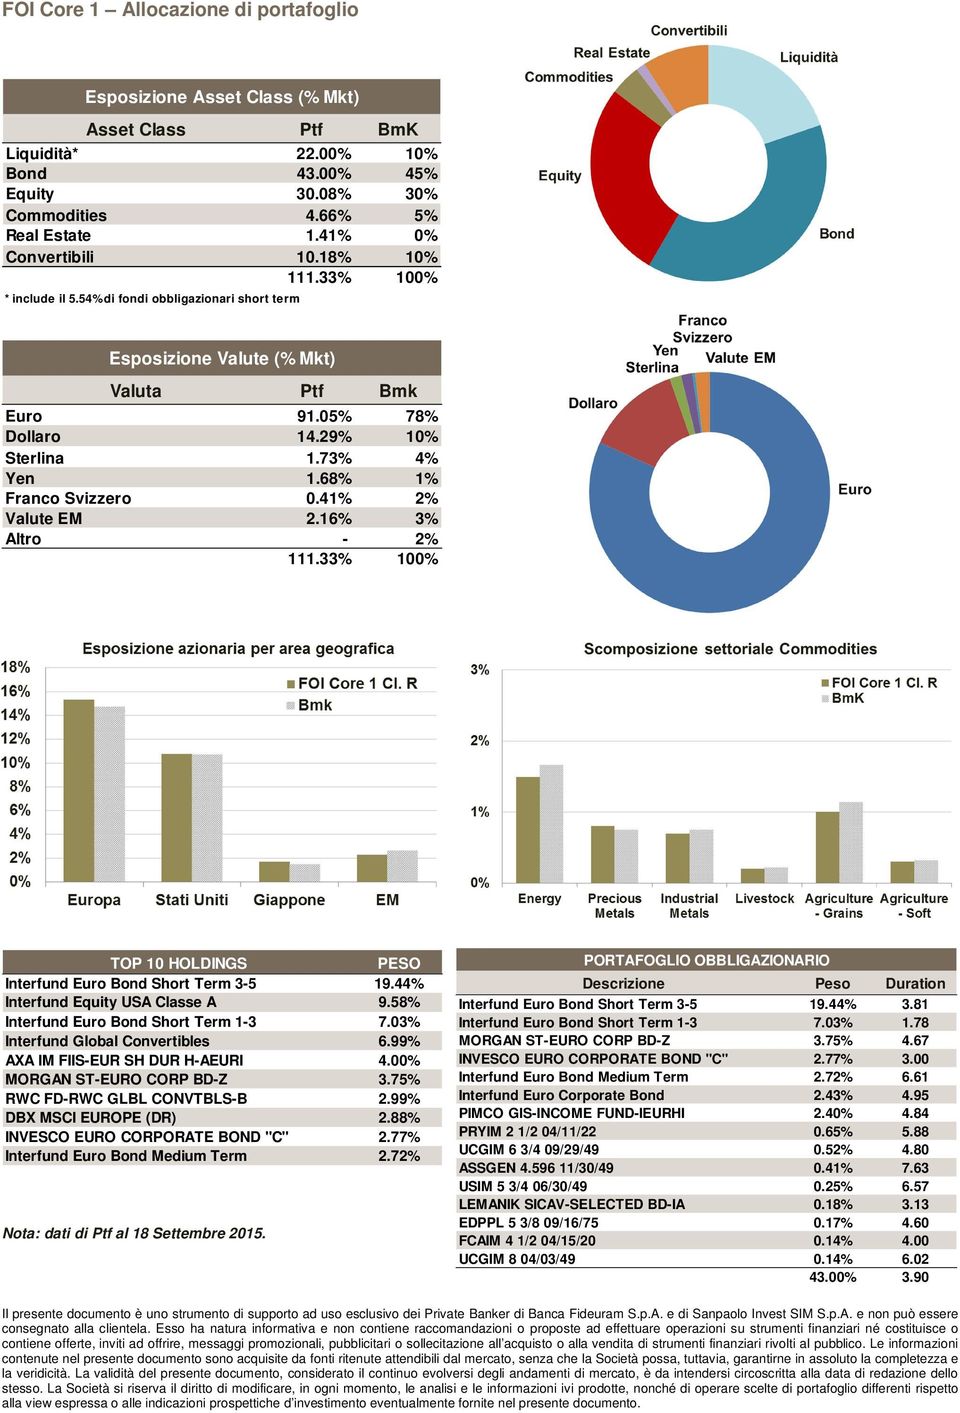 68% 1% Franco Svizzero 0.41% 2% Valute EM 2.16% 3% Altro - 2% 111.33% 100% TOP 10 HOLDINGS PESO Interfund Euro Bond Short Term 3-5 19.44% Interfund Equity USA Classe A 9.